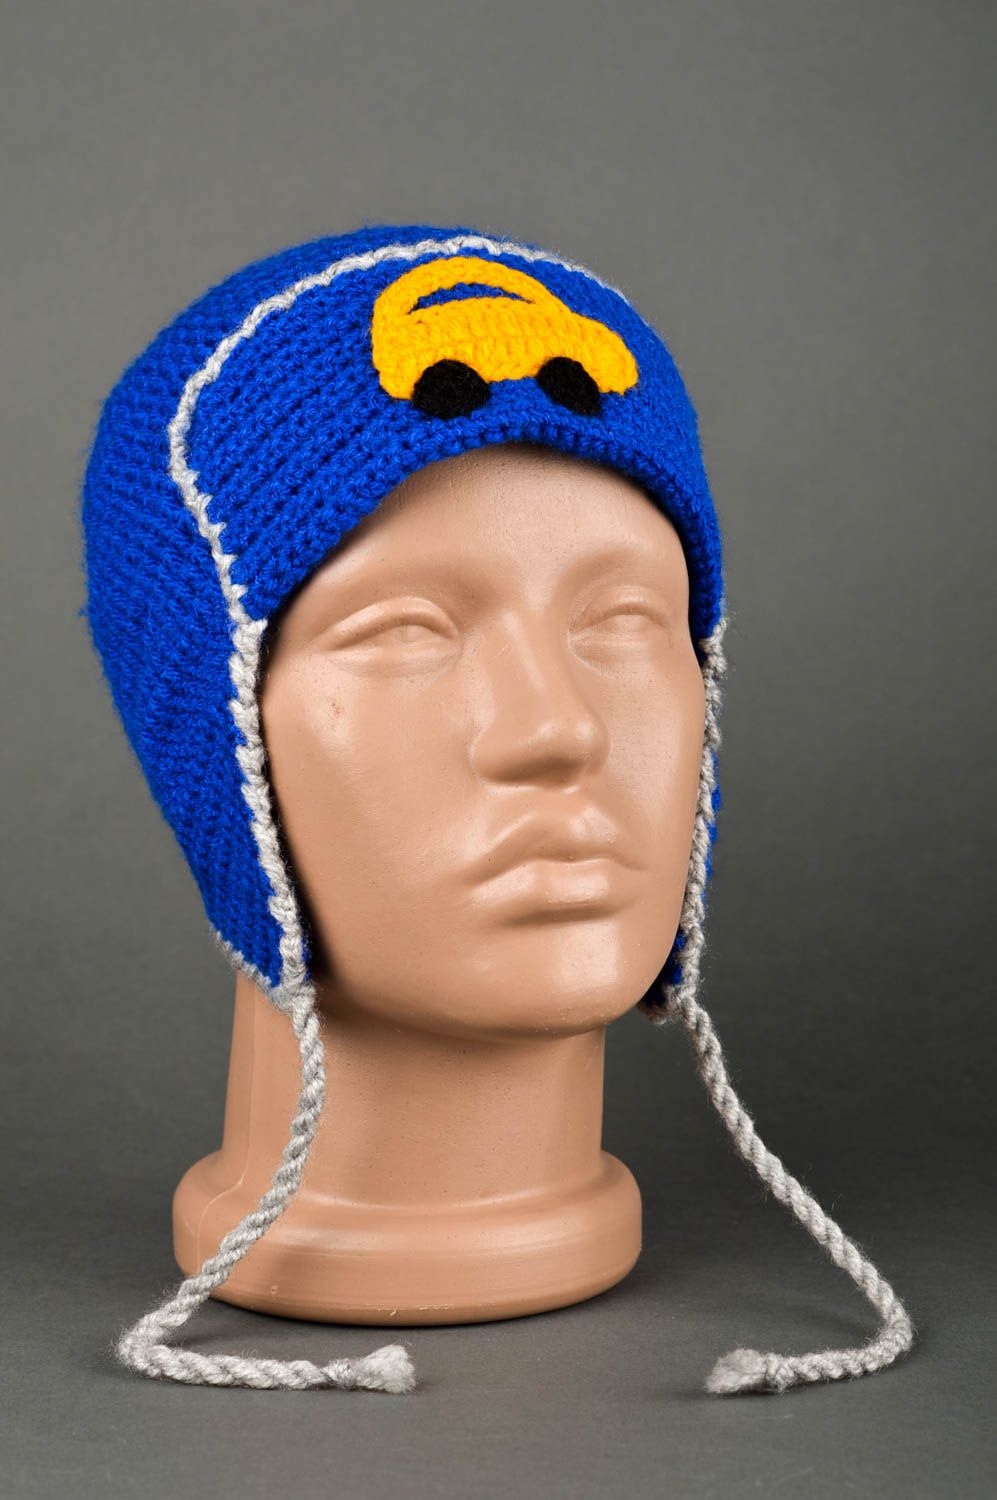 Handmade winter hat knitted hat cool hat kids accessories goods for children photo 1